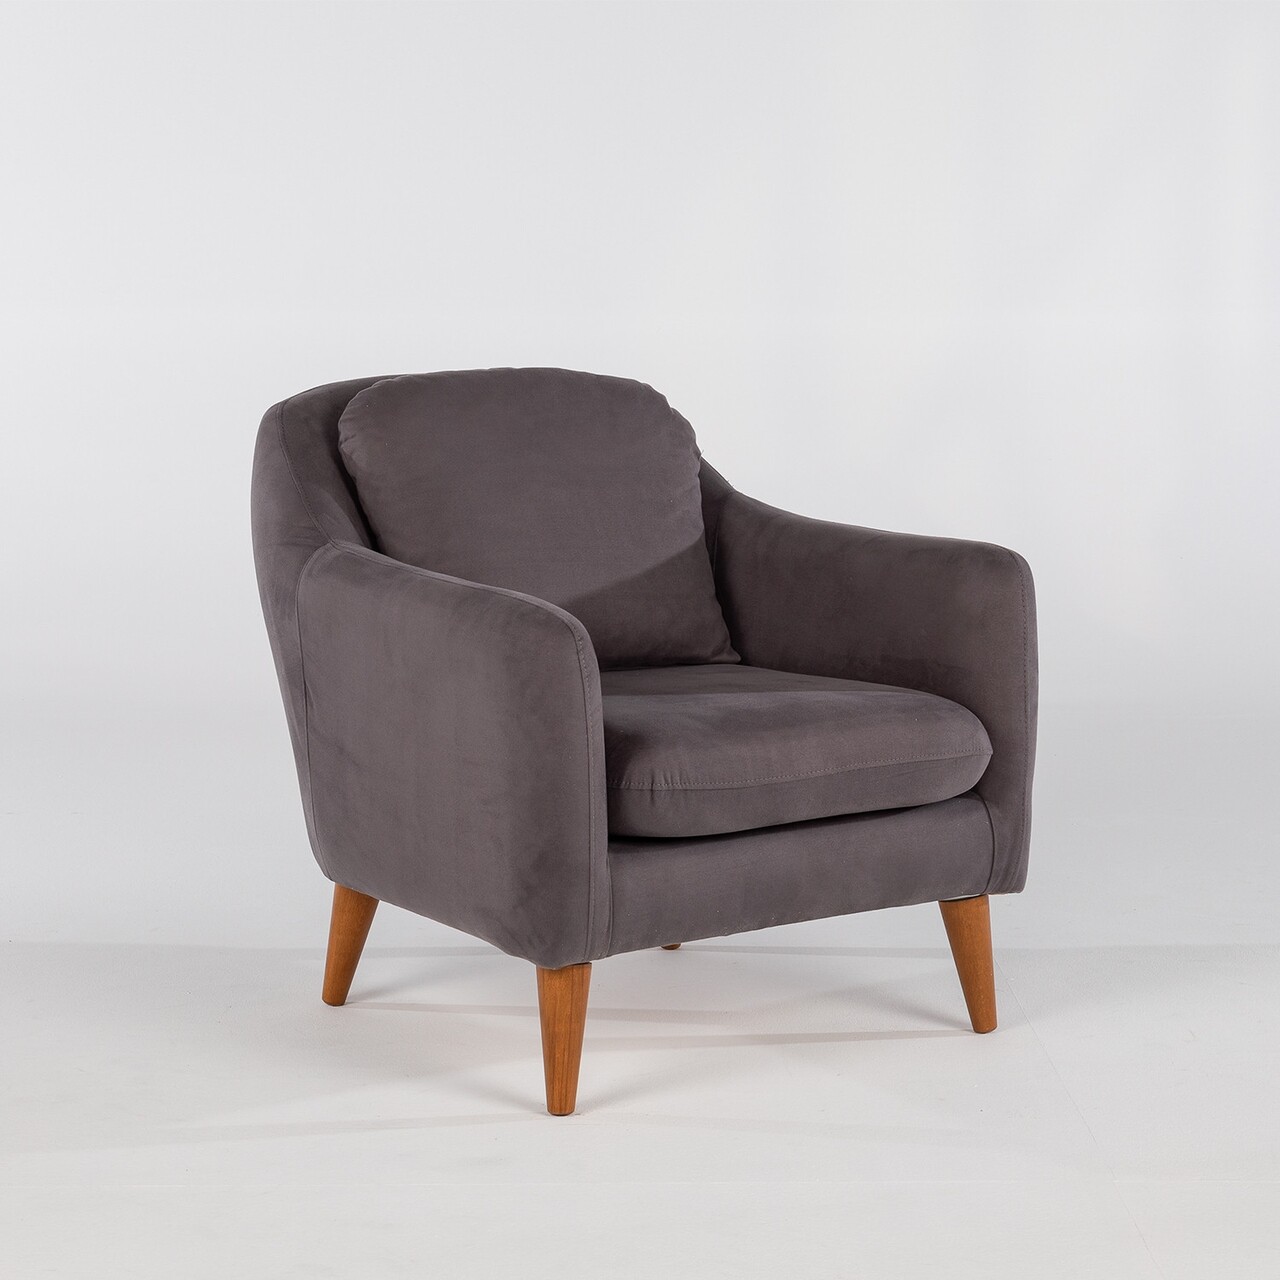 Soli Berjer Fotel, Unique Design, 71x77x84 Cm, Erdeifenyő/textil, Antracitszürke